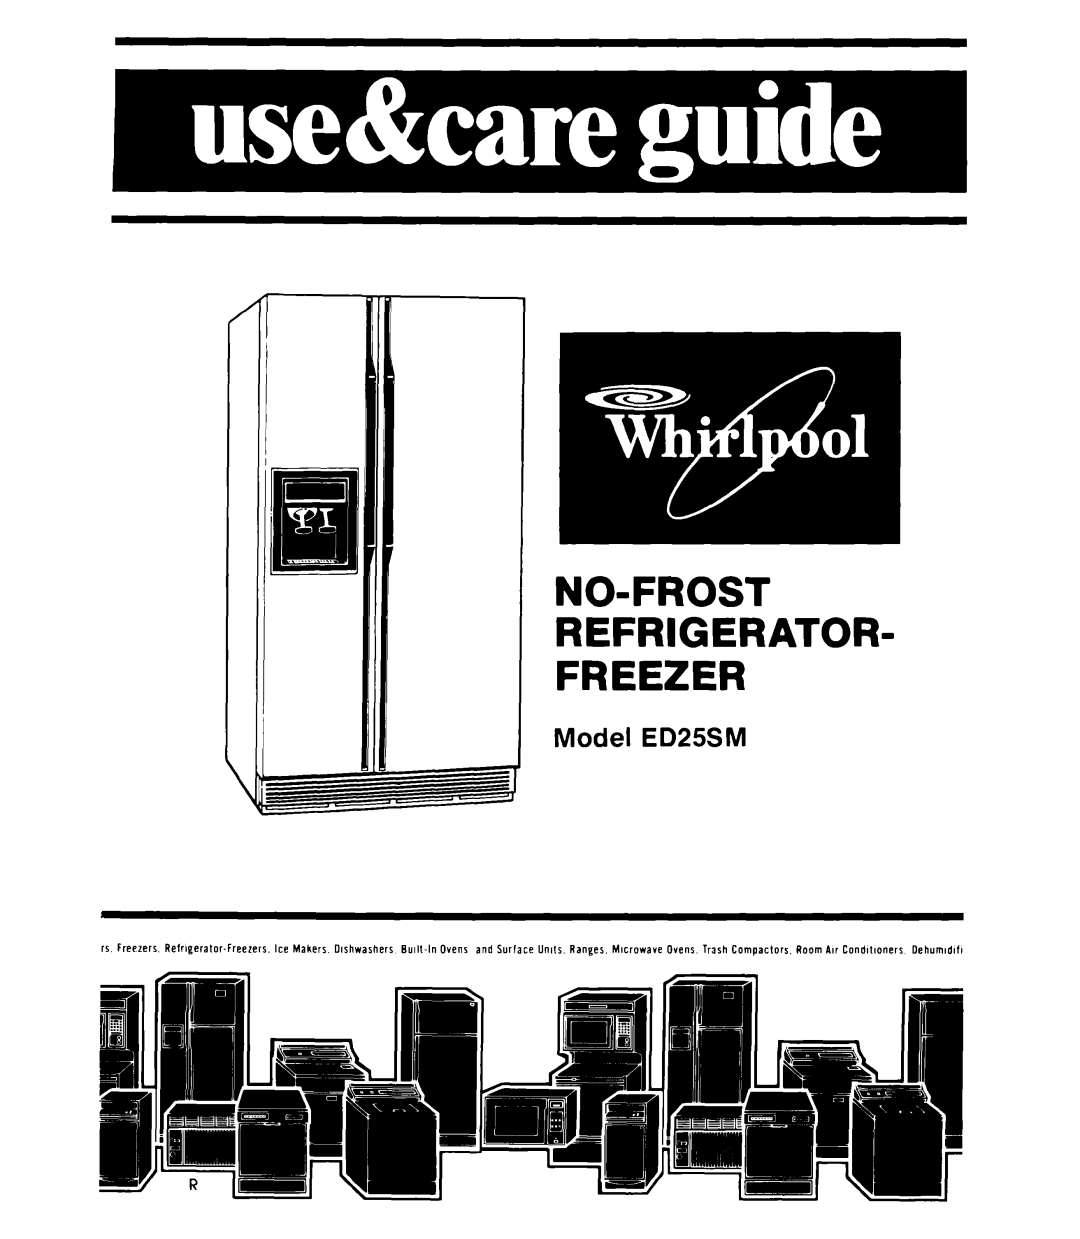 Whirlpool ED25SMIII manual 4 III,, 1 Model ED25SM, Refrigerator Freezer 